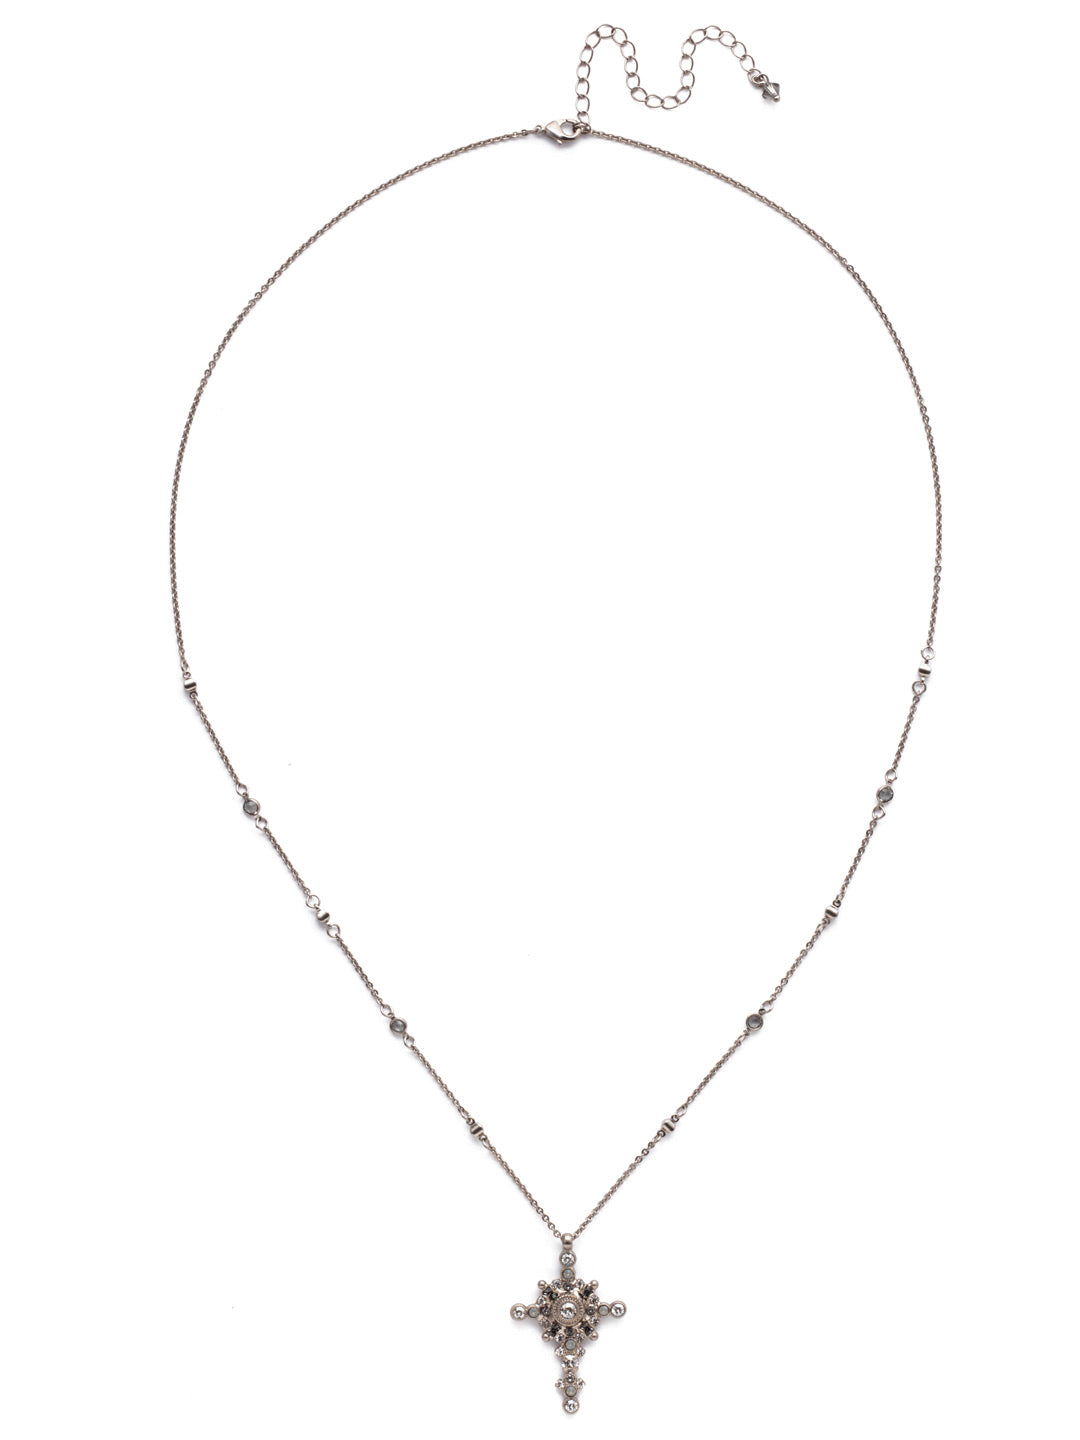 Divinity Cross Pendant, Silver Cross Necklace Pendant